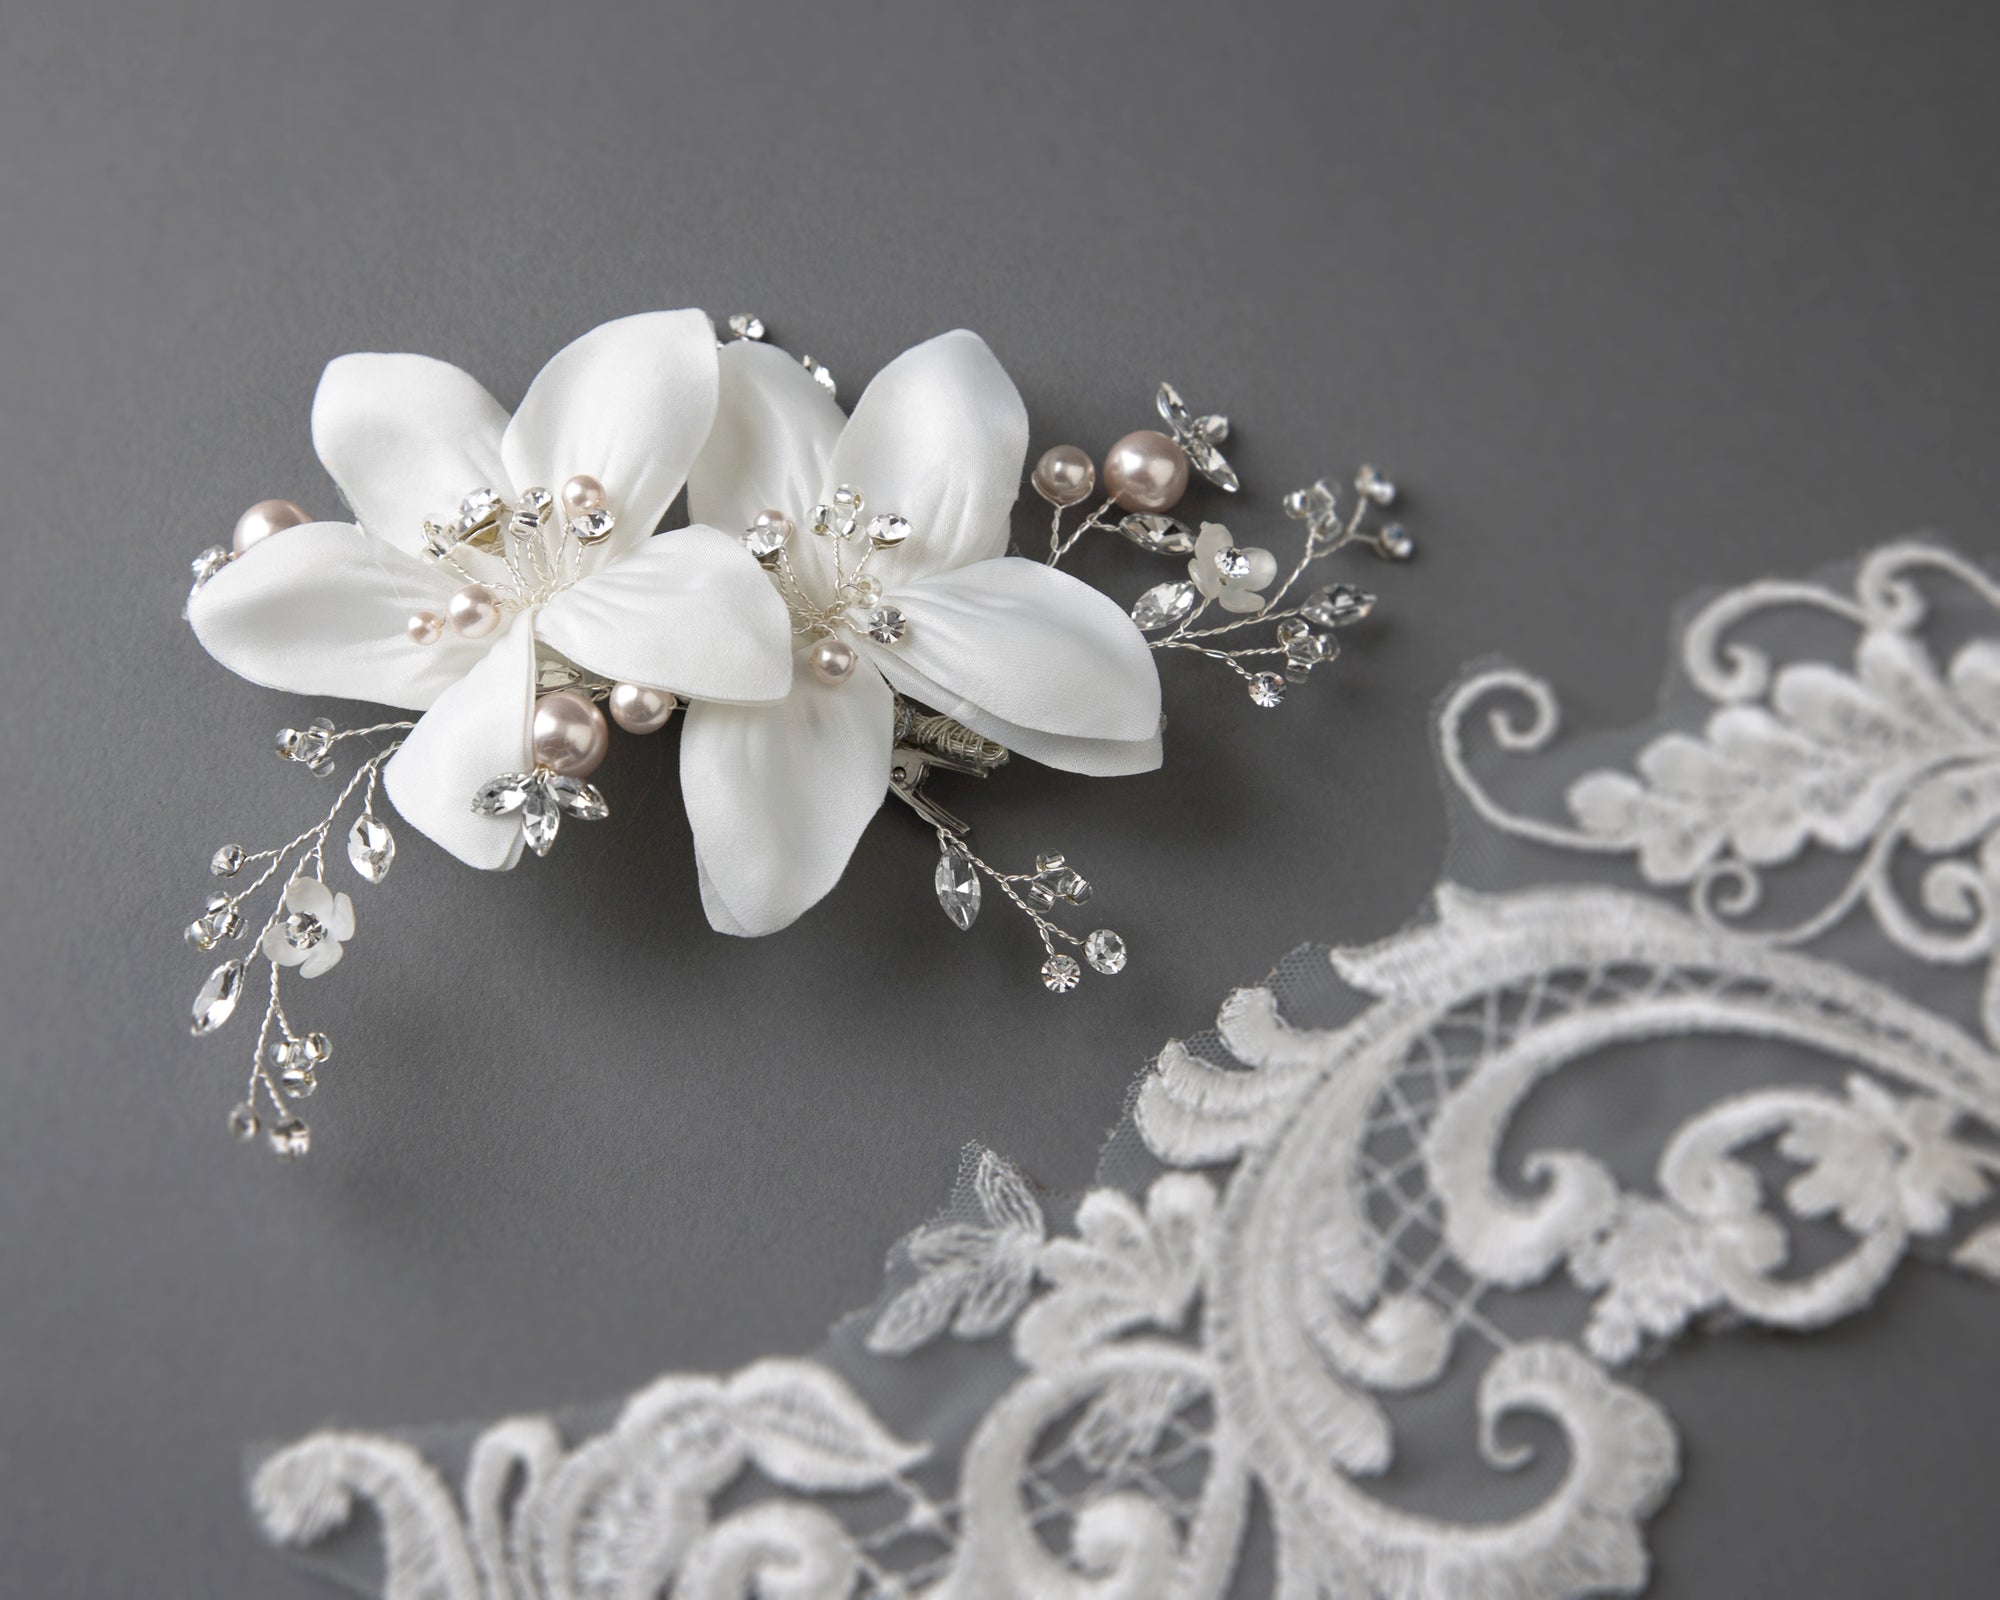 Ivory Wedding Hair Flower with Light Blush Pearls Cassandra Lynne